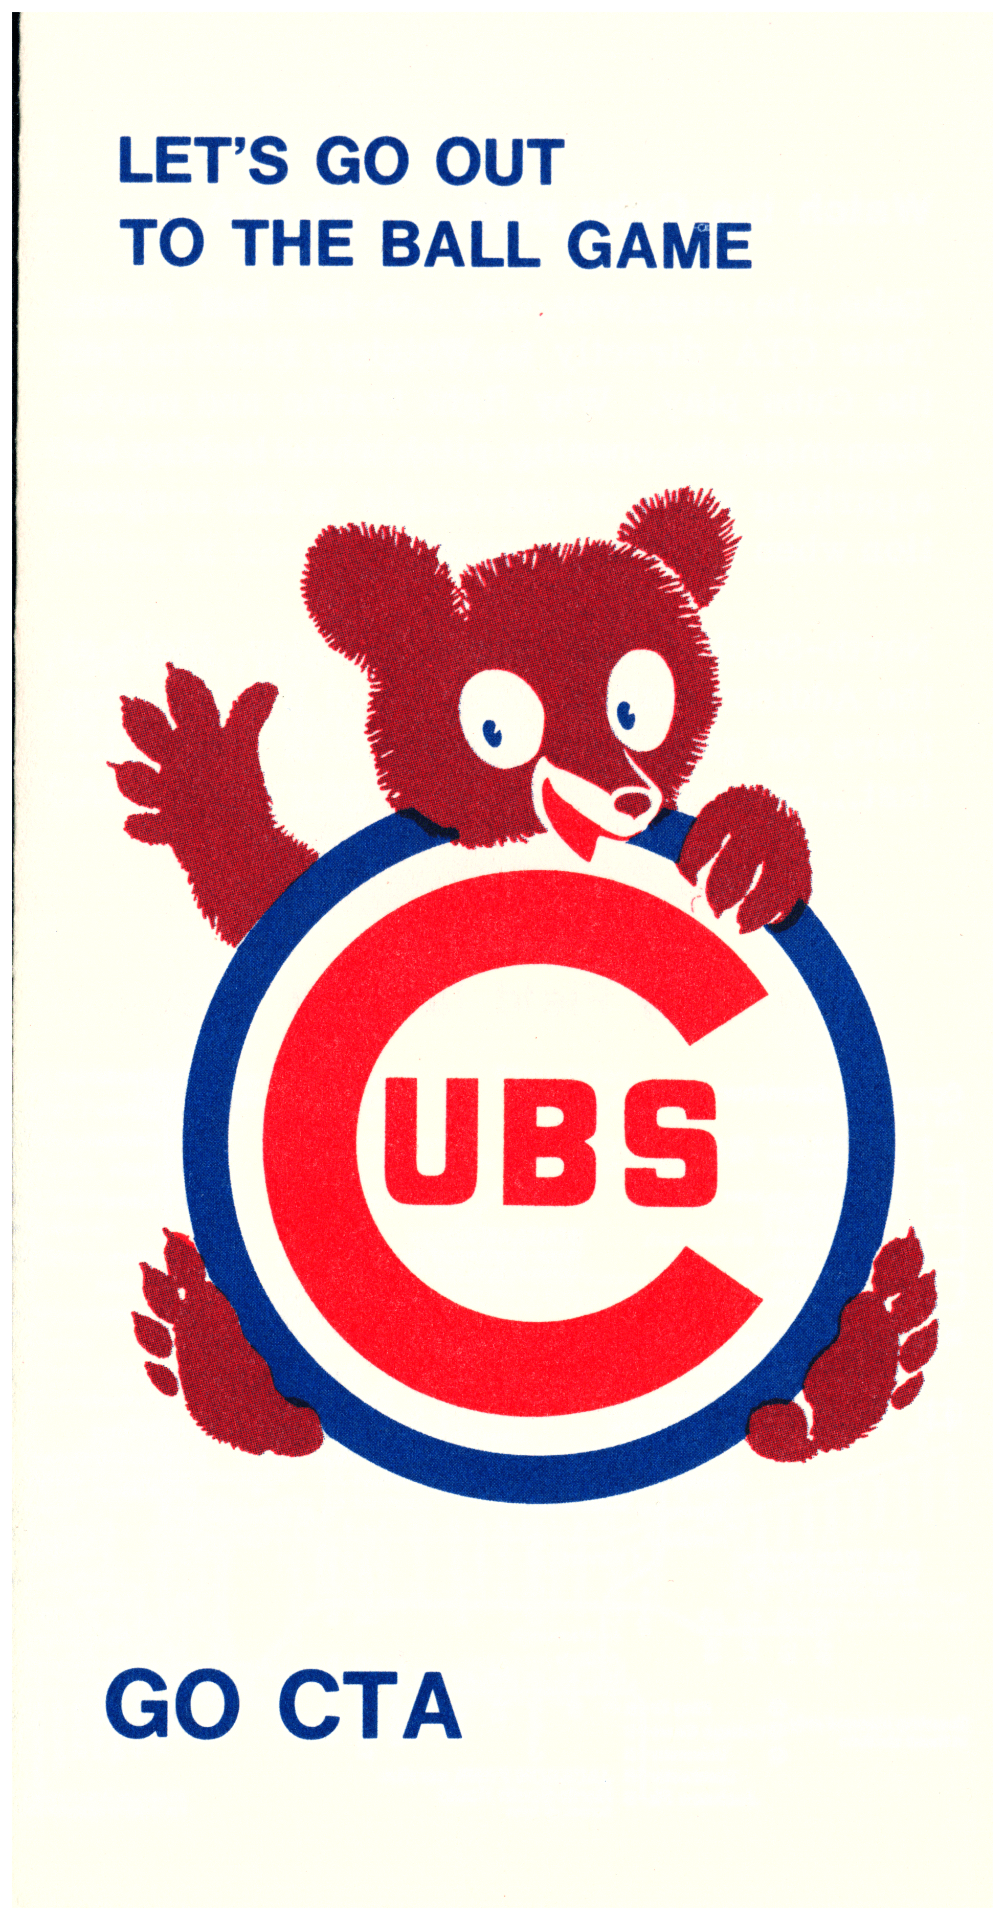 Cubs logo and a bear cub